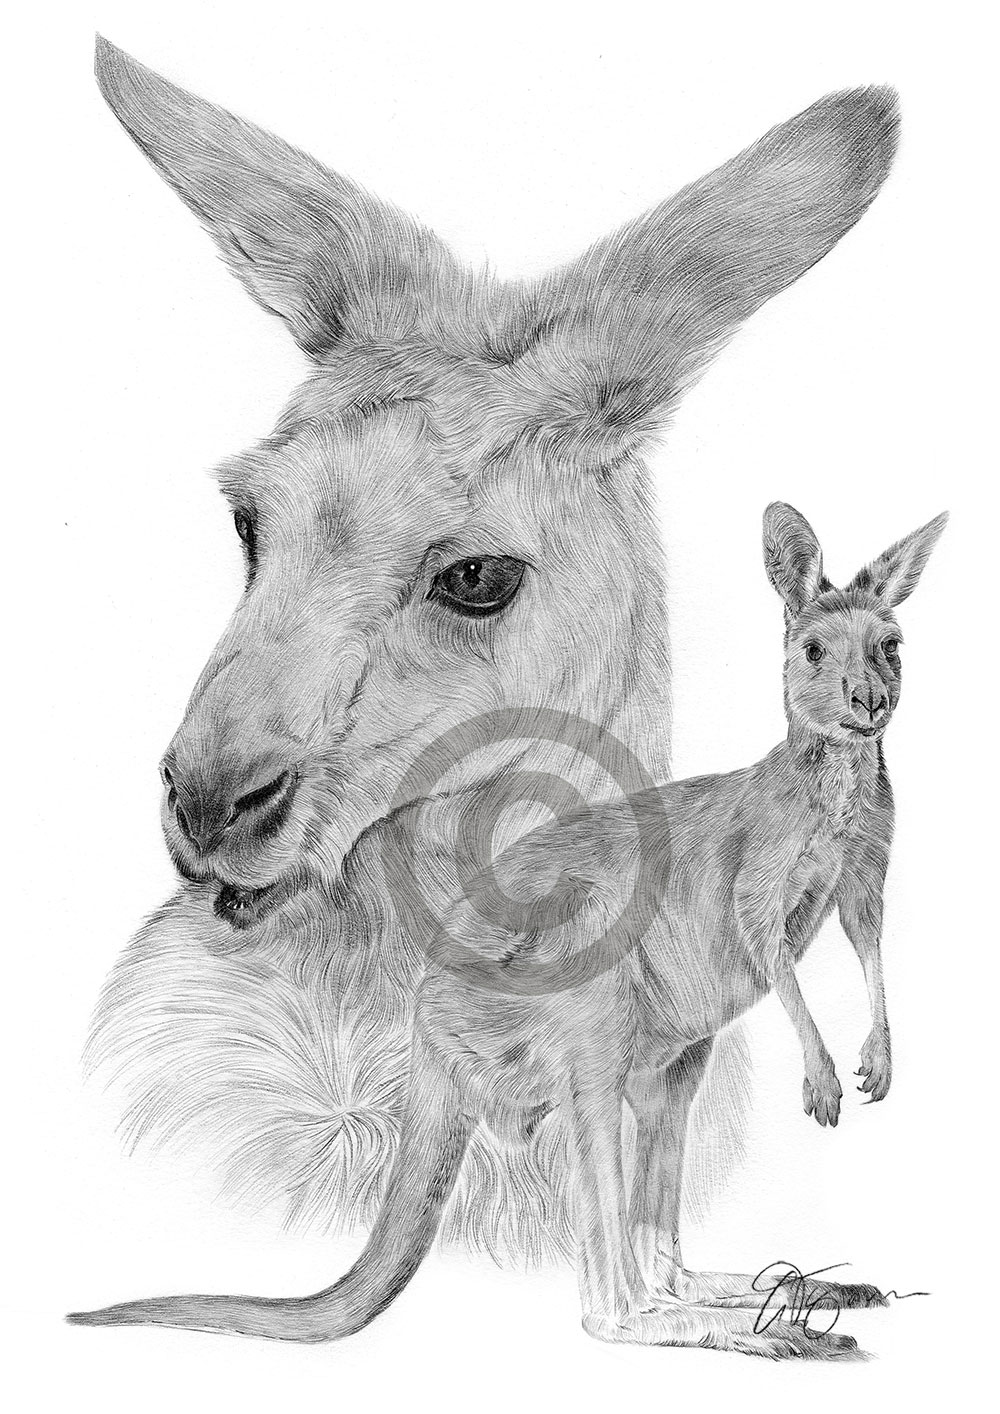 Pencil drawing of two kangaroos by artist Gary Tymon